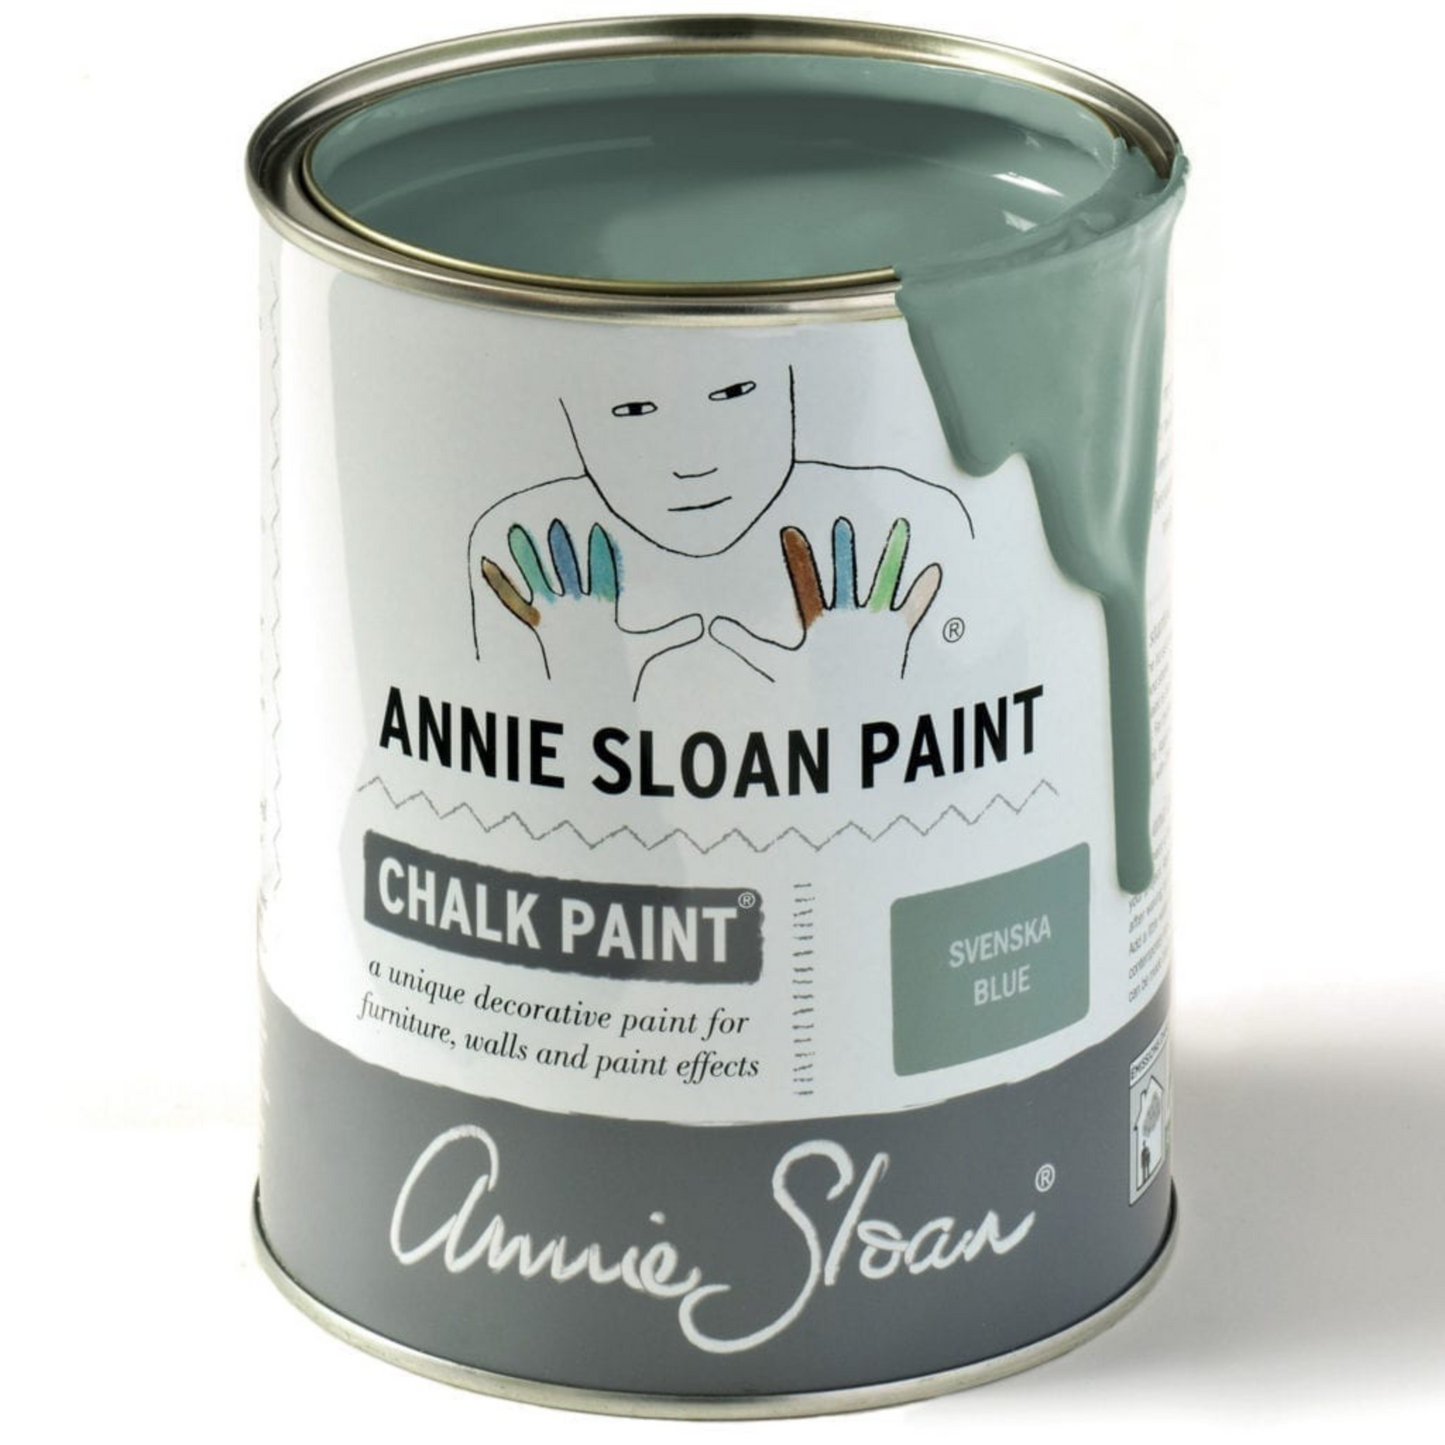 Can of Svenska Blue Annie Sloan Chalk paint.